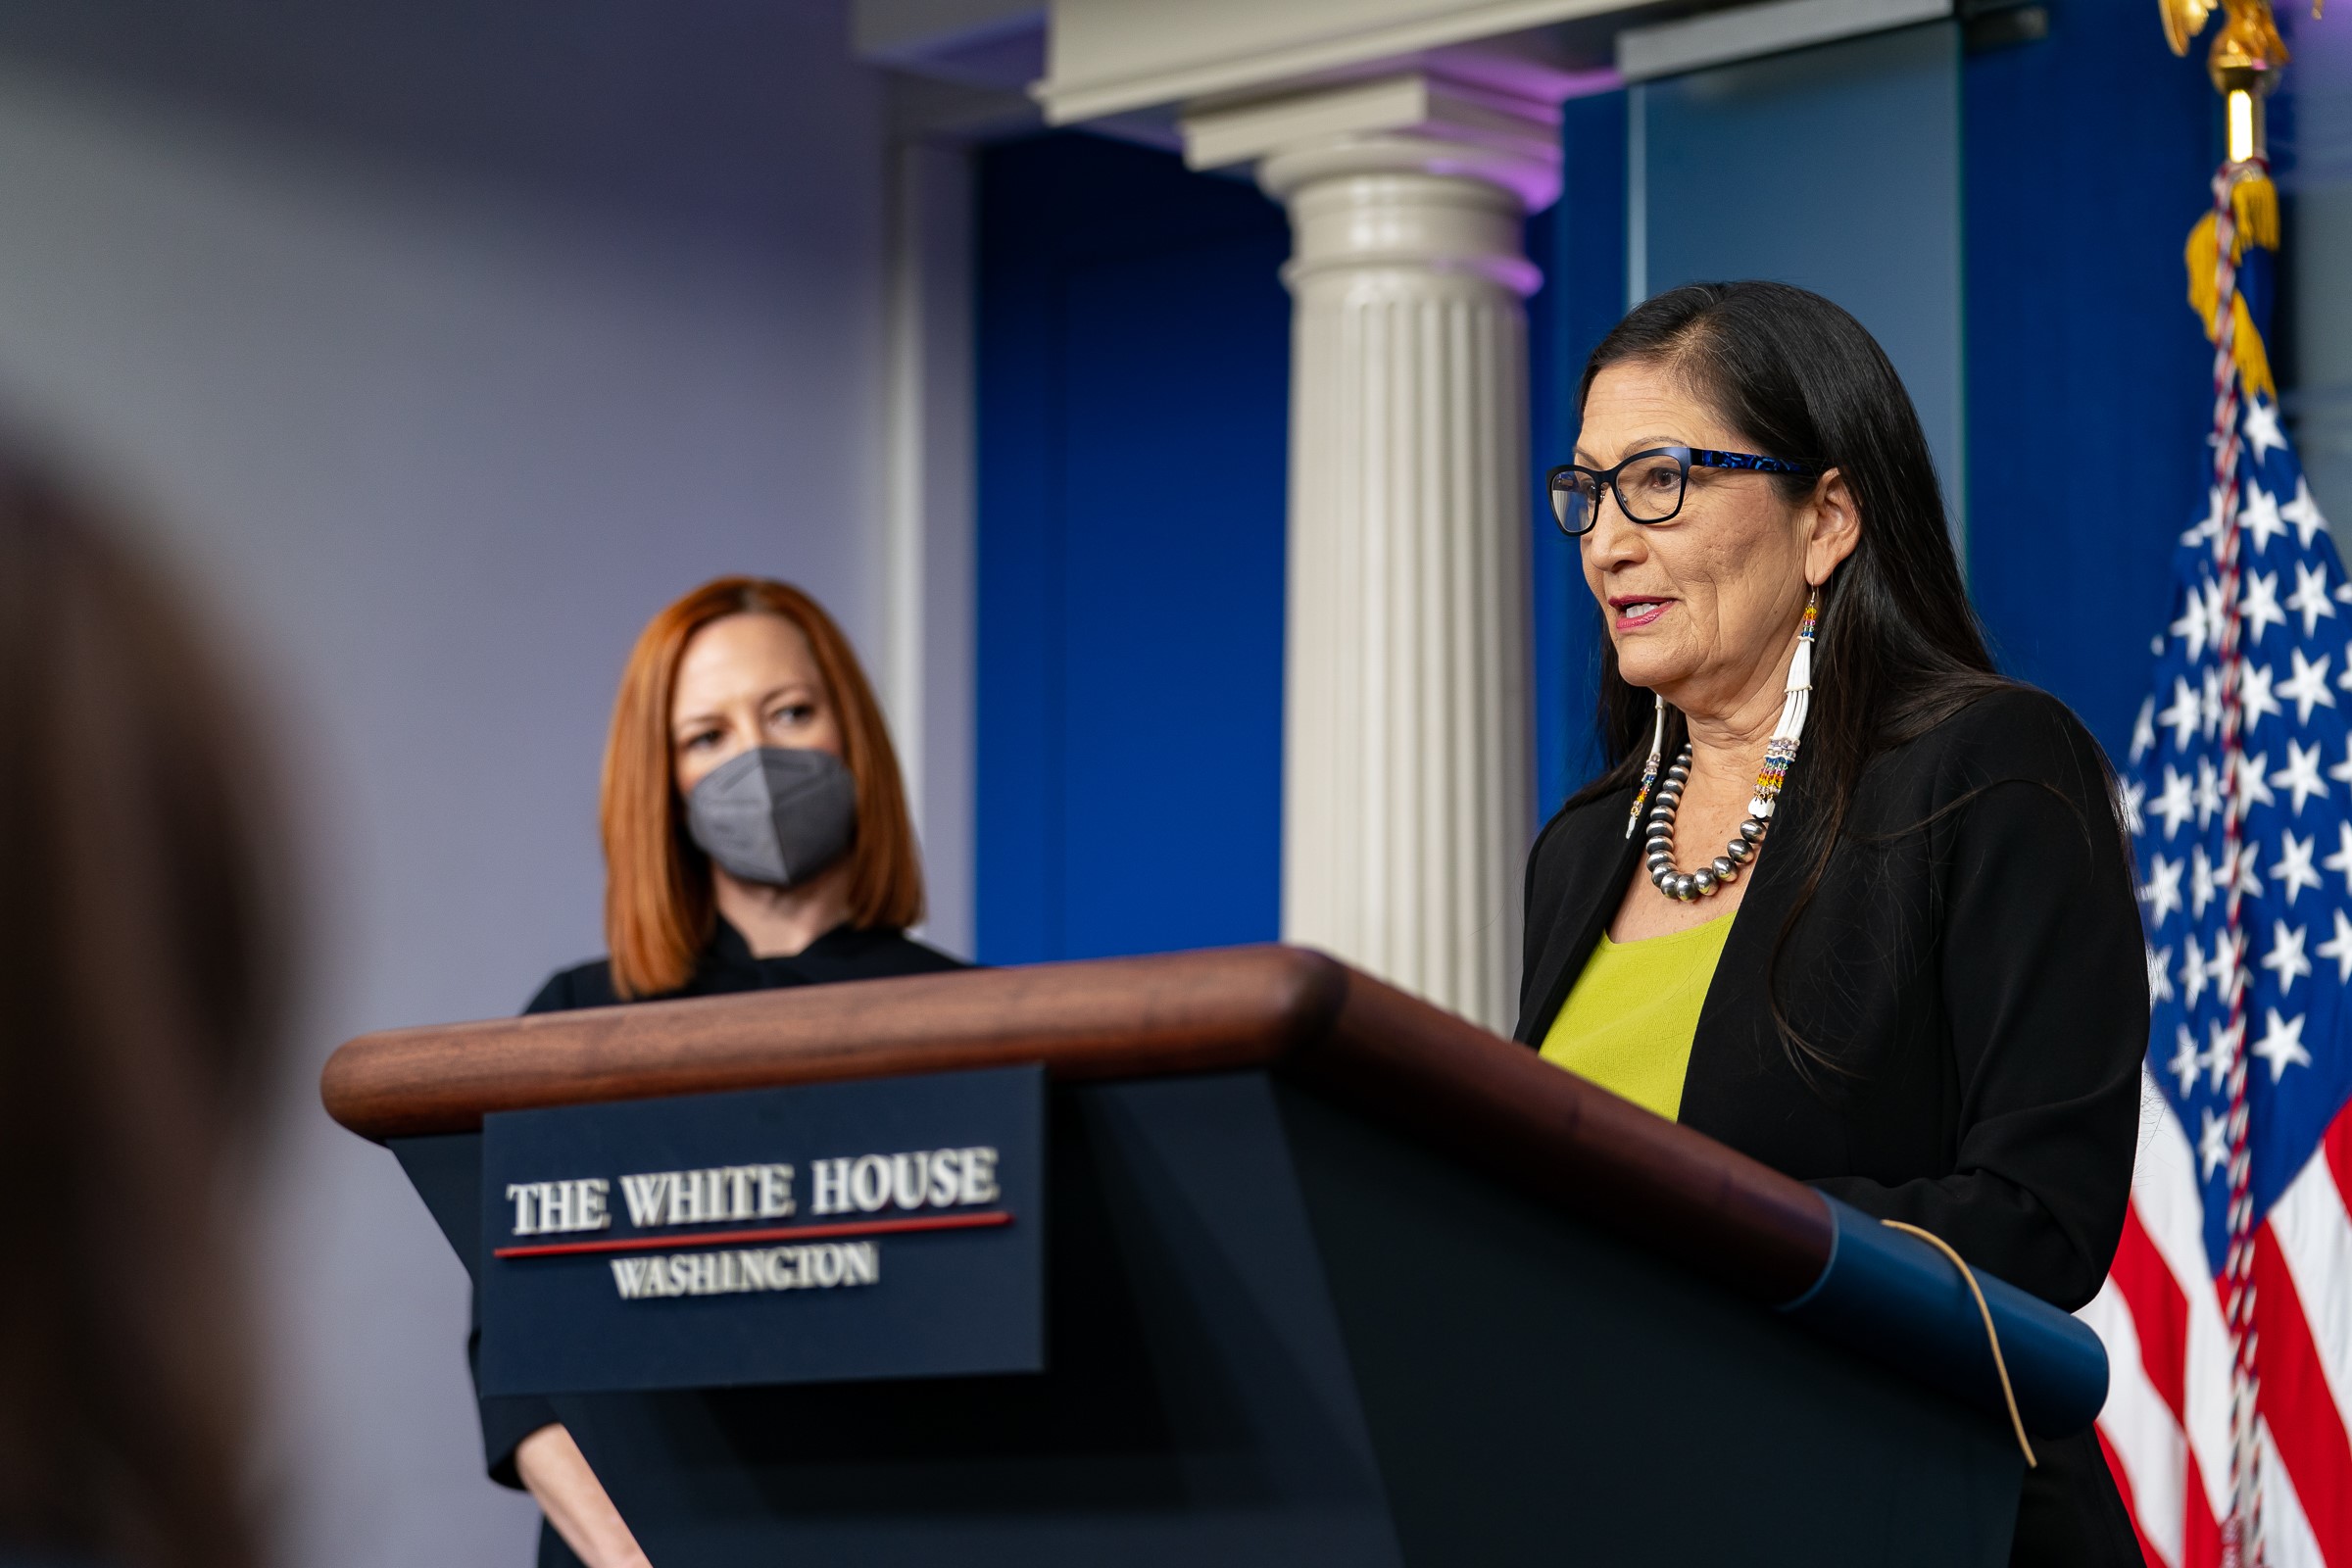 Secretary Haaland speaks at a podium next to White House Press Secretary.